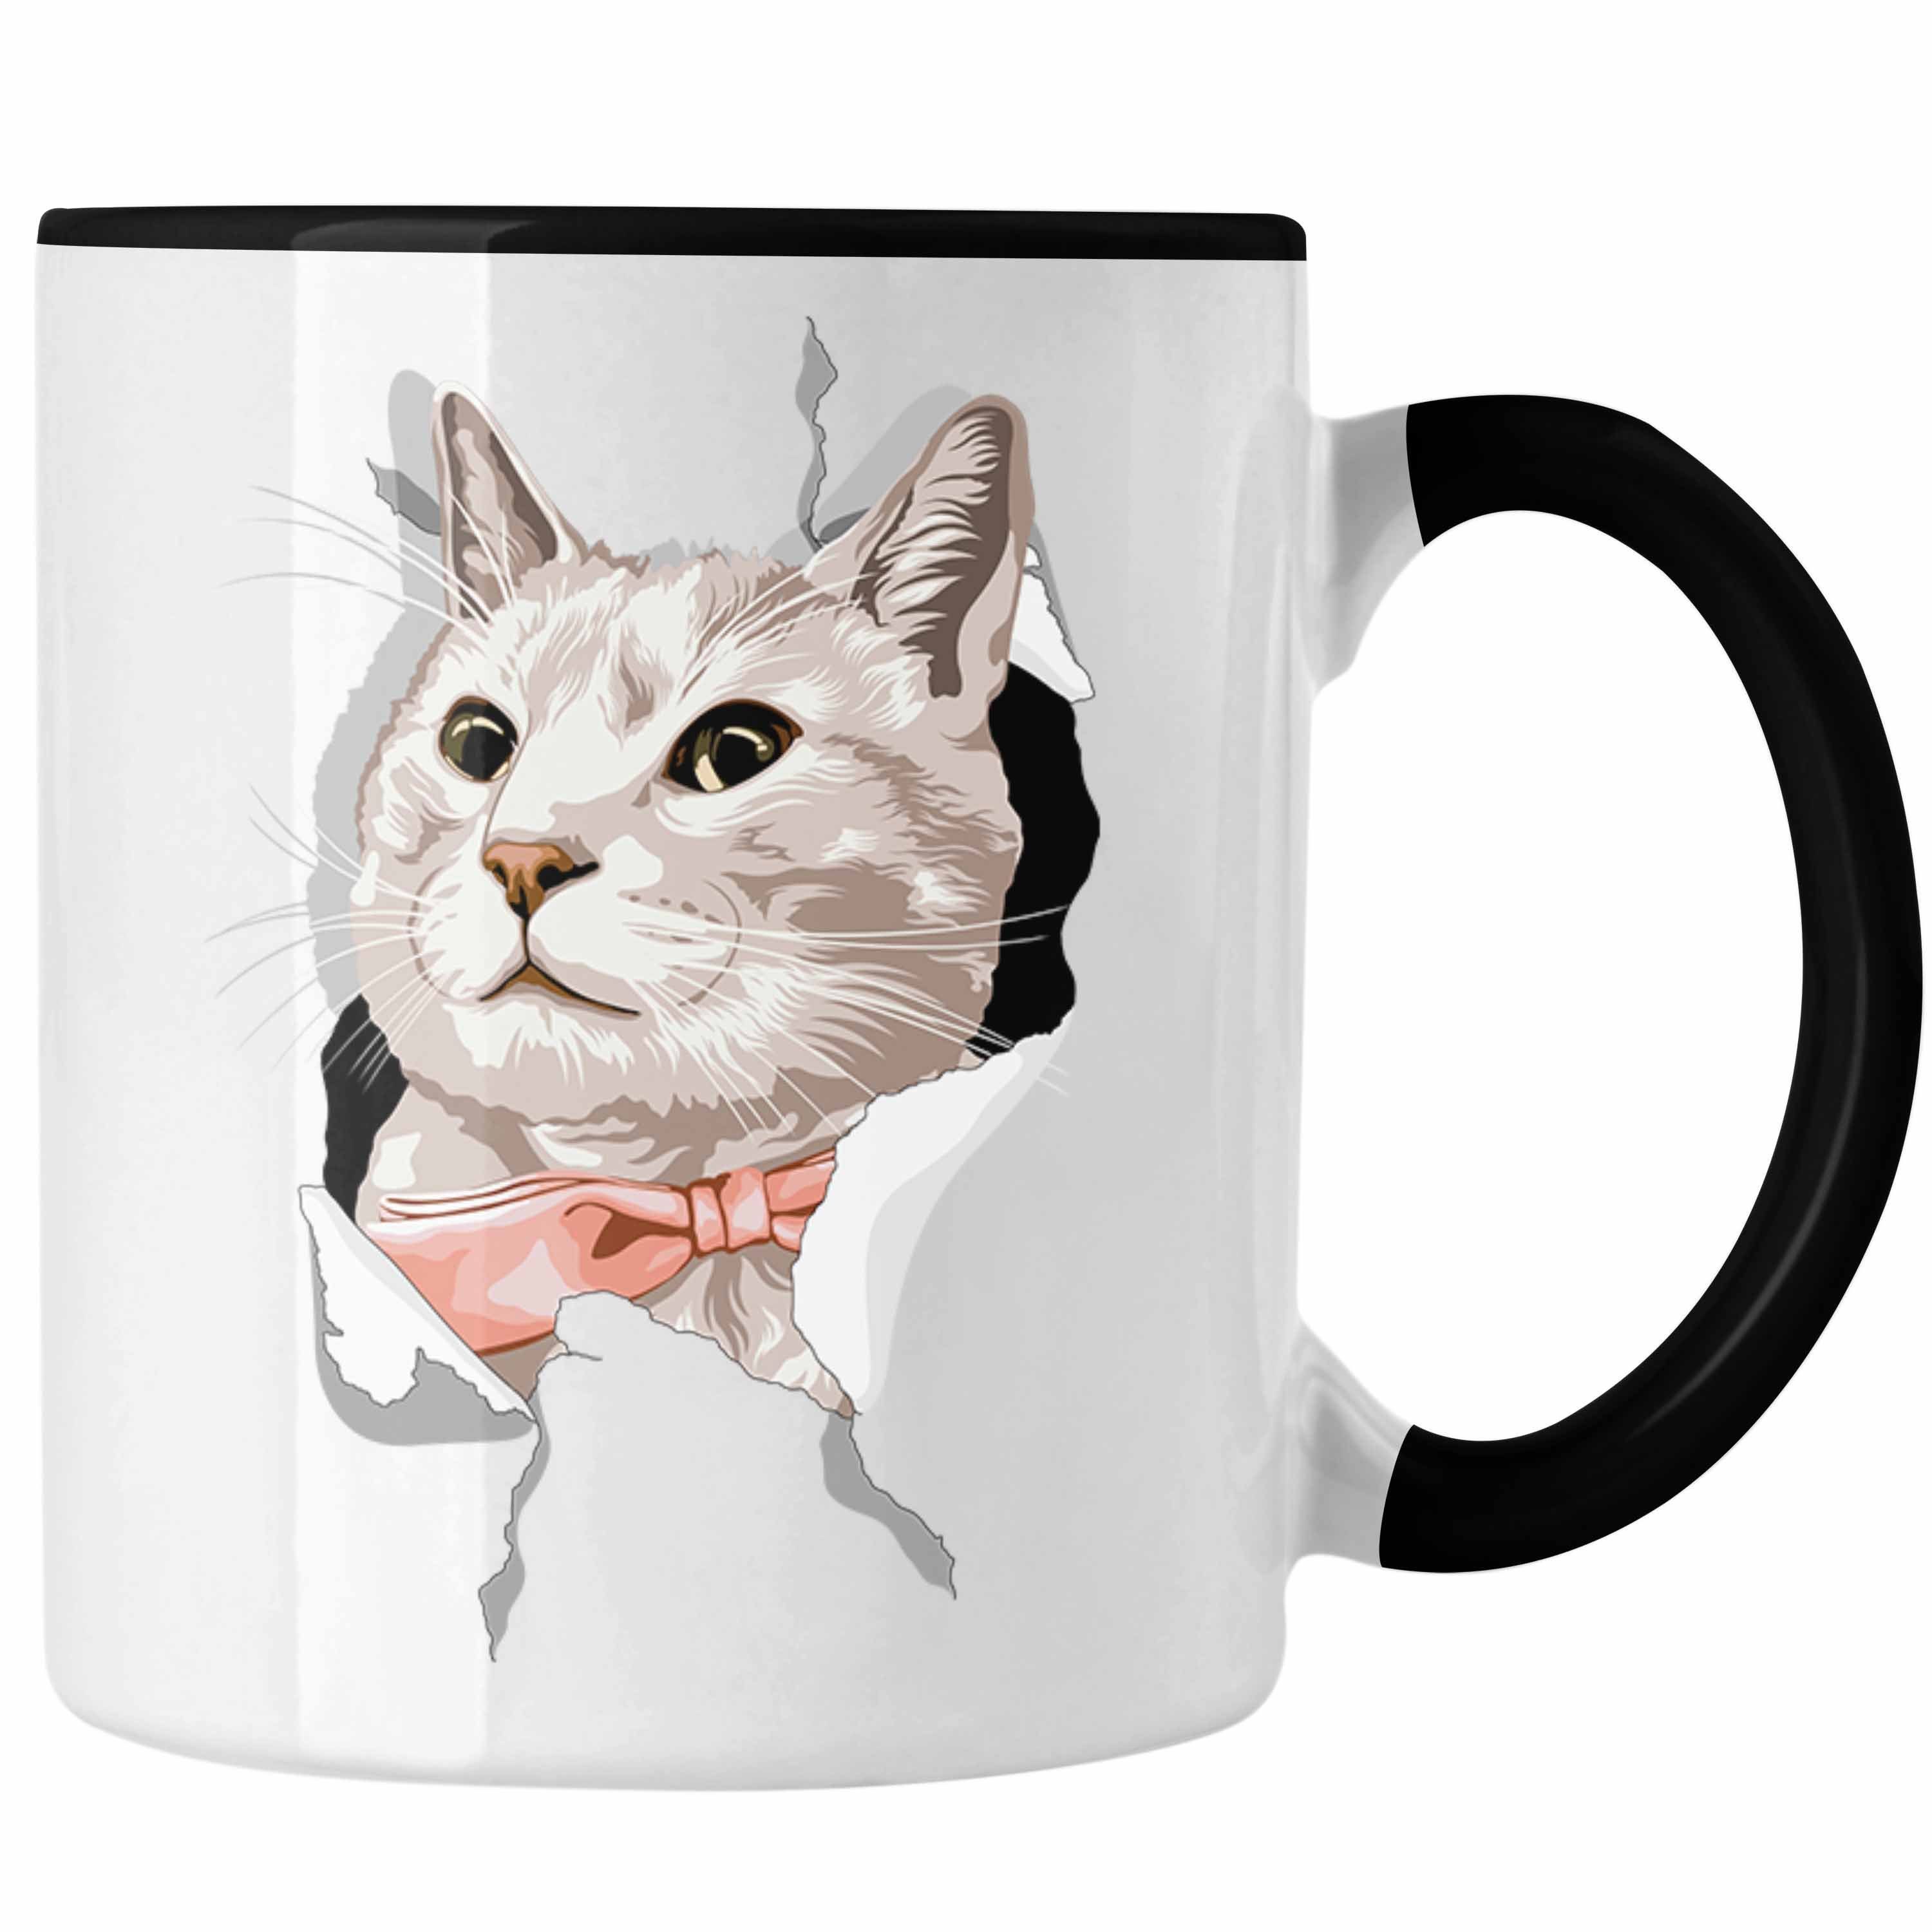 Trendation Tasse Trendation - Lustige Katzen Tasse Geschenk Katzenbesitzerin 3D Katzengrafik Geschenkidee Schwarz